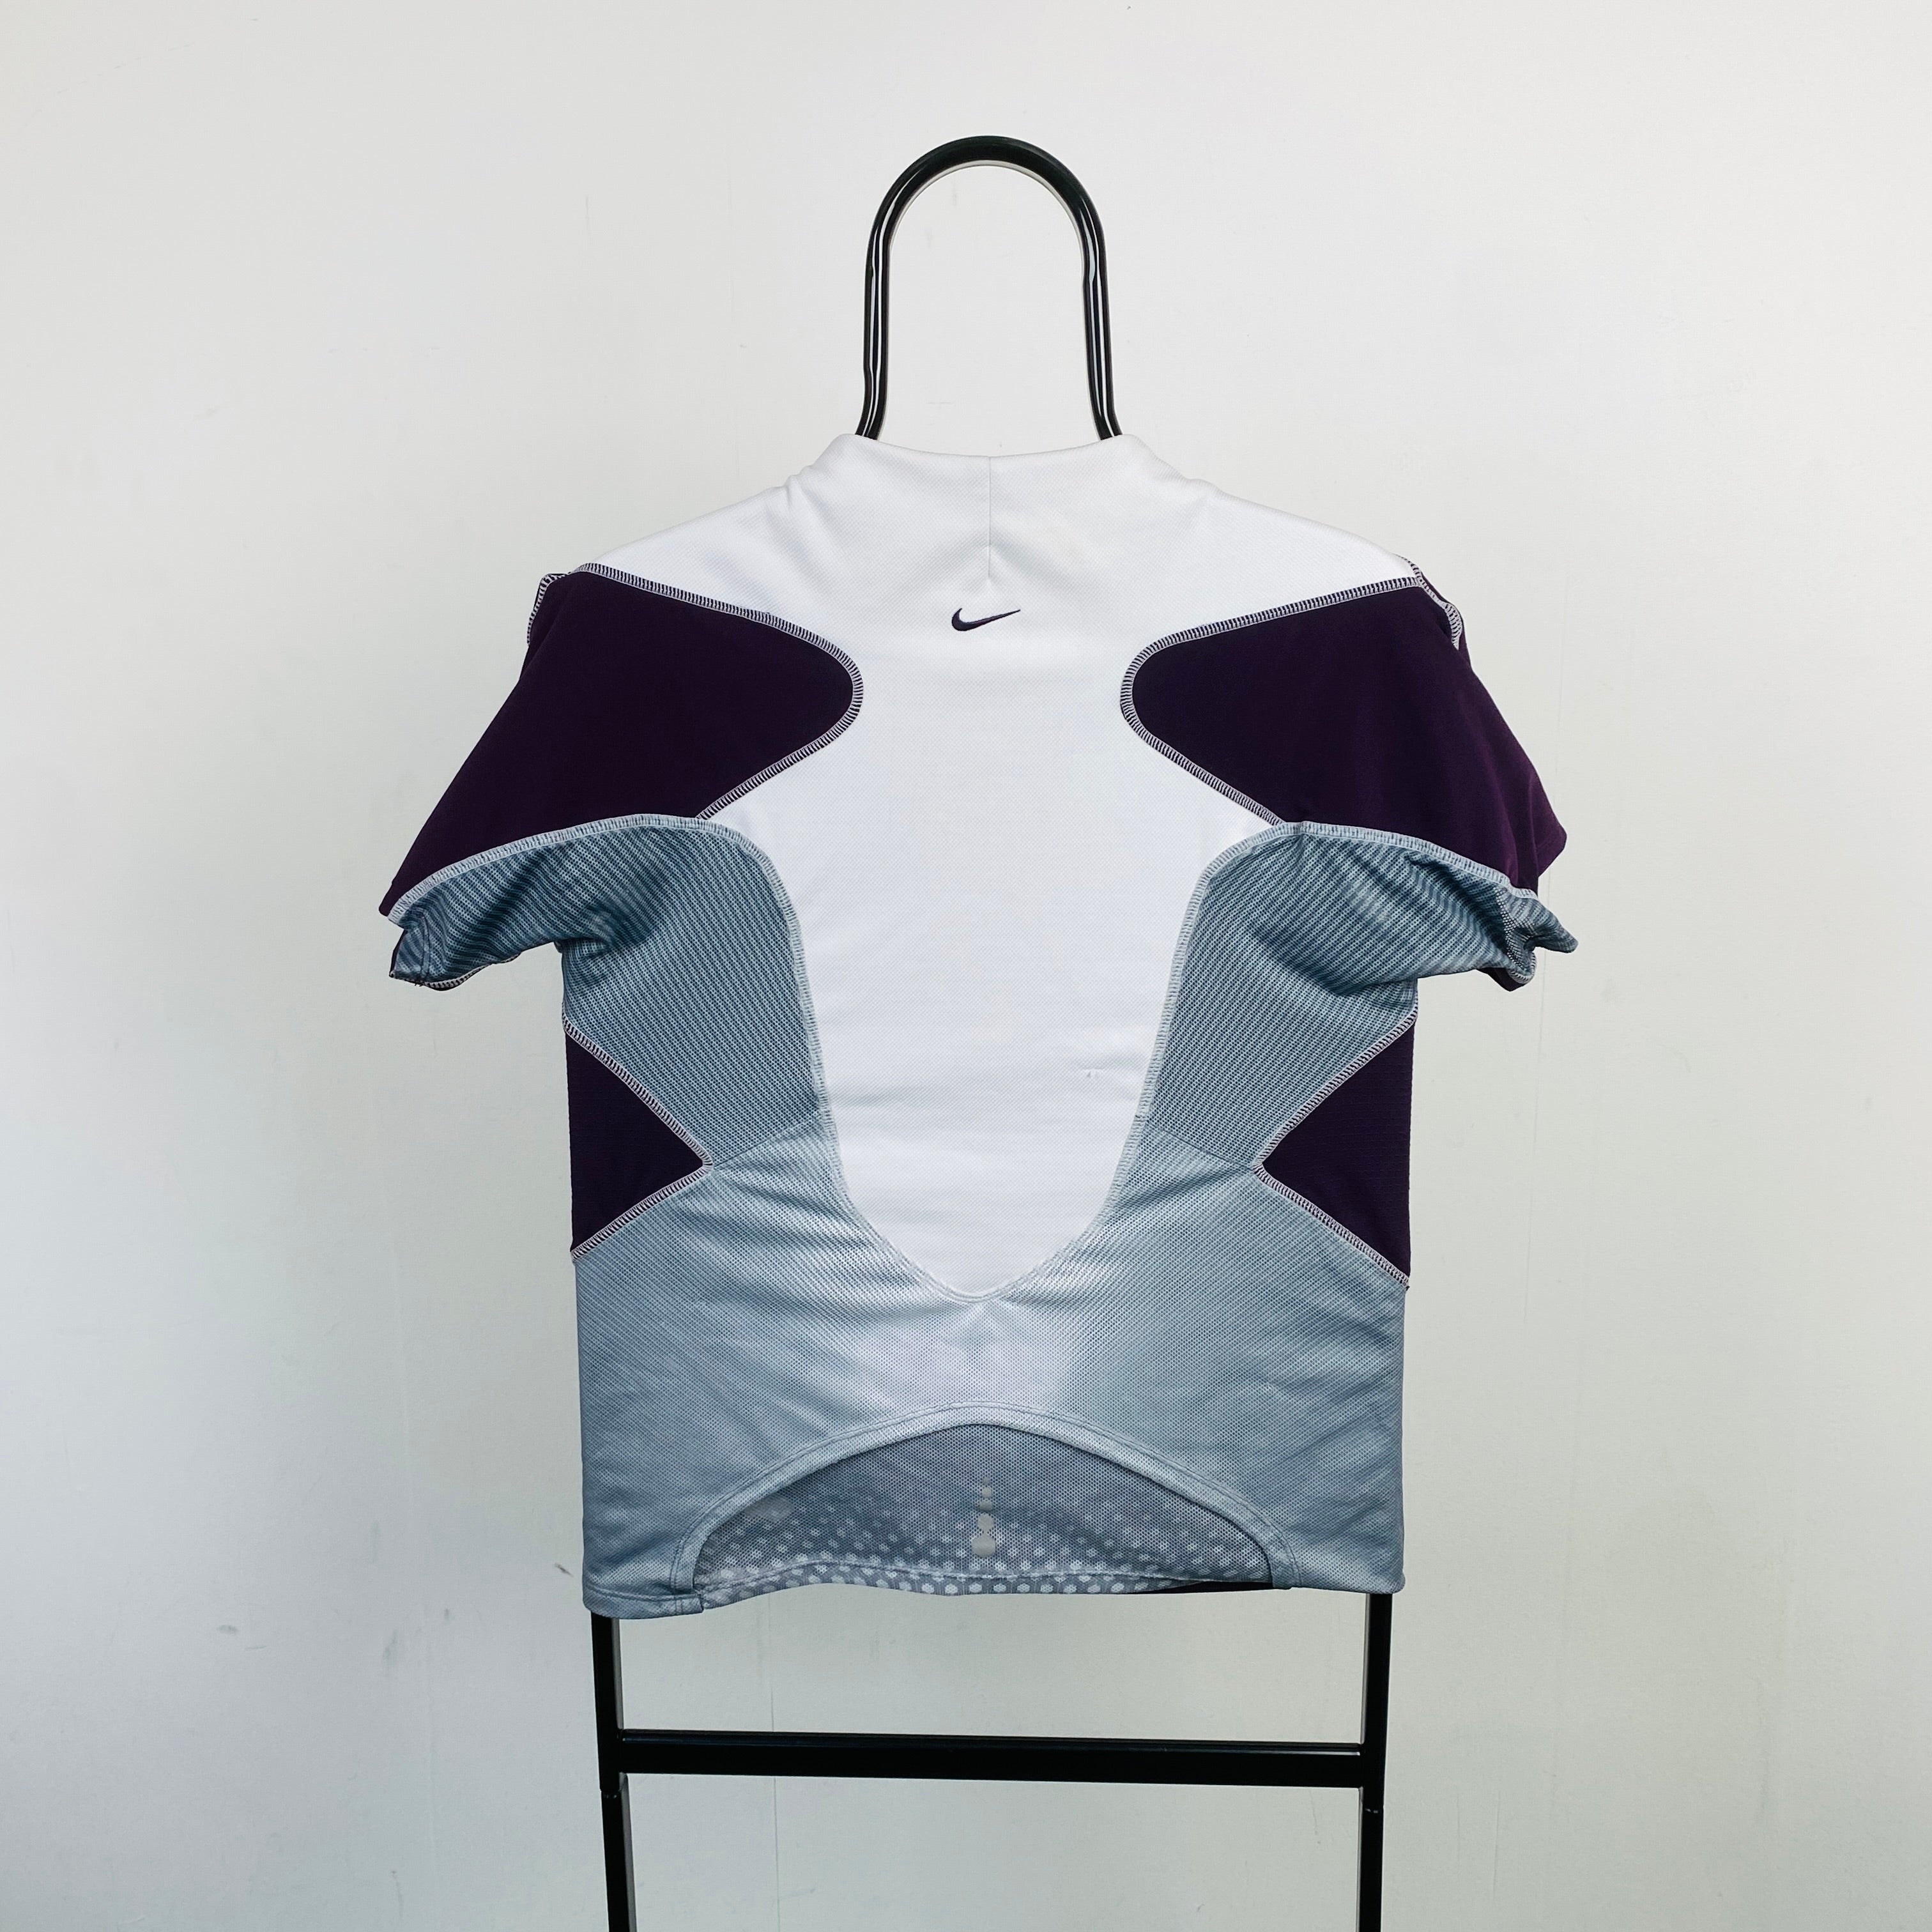 00s Nike Sphere Dry T-Shirt Purple Women’s Large